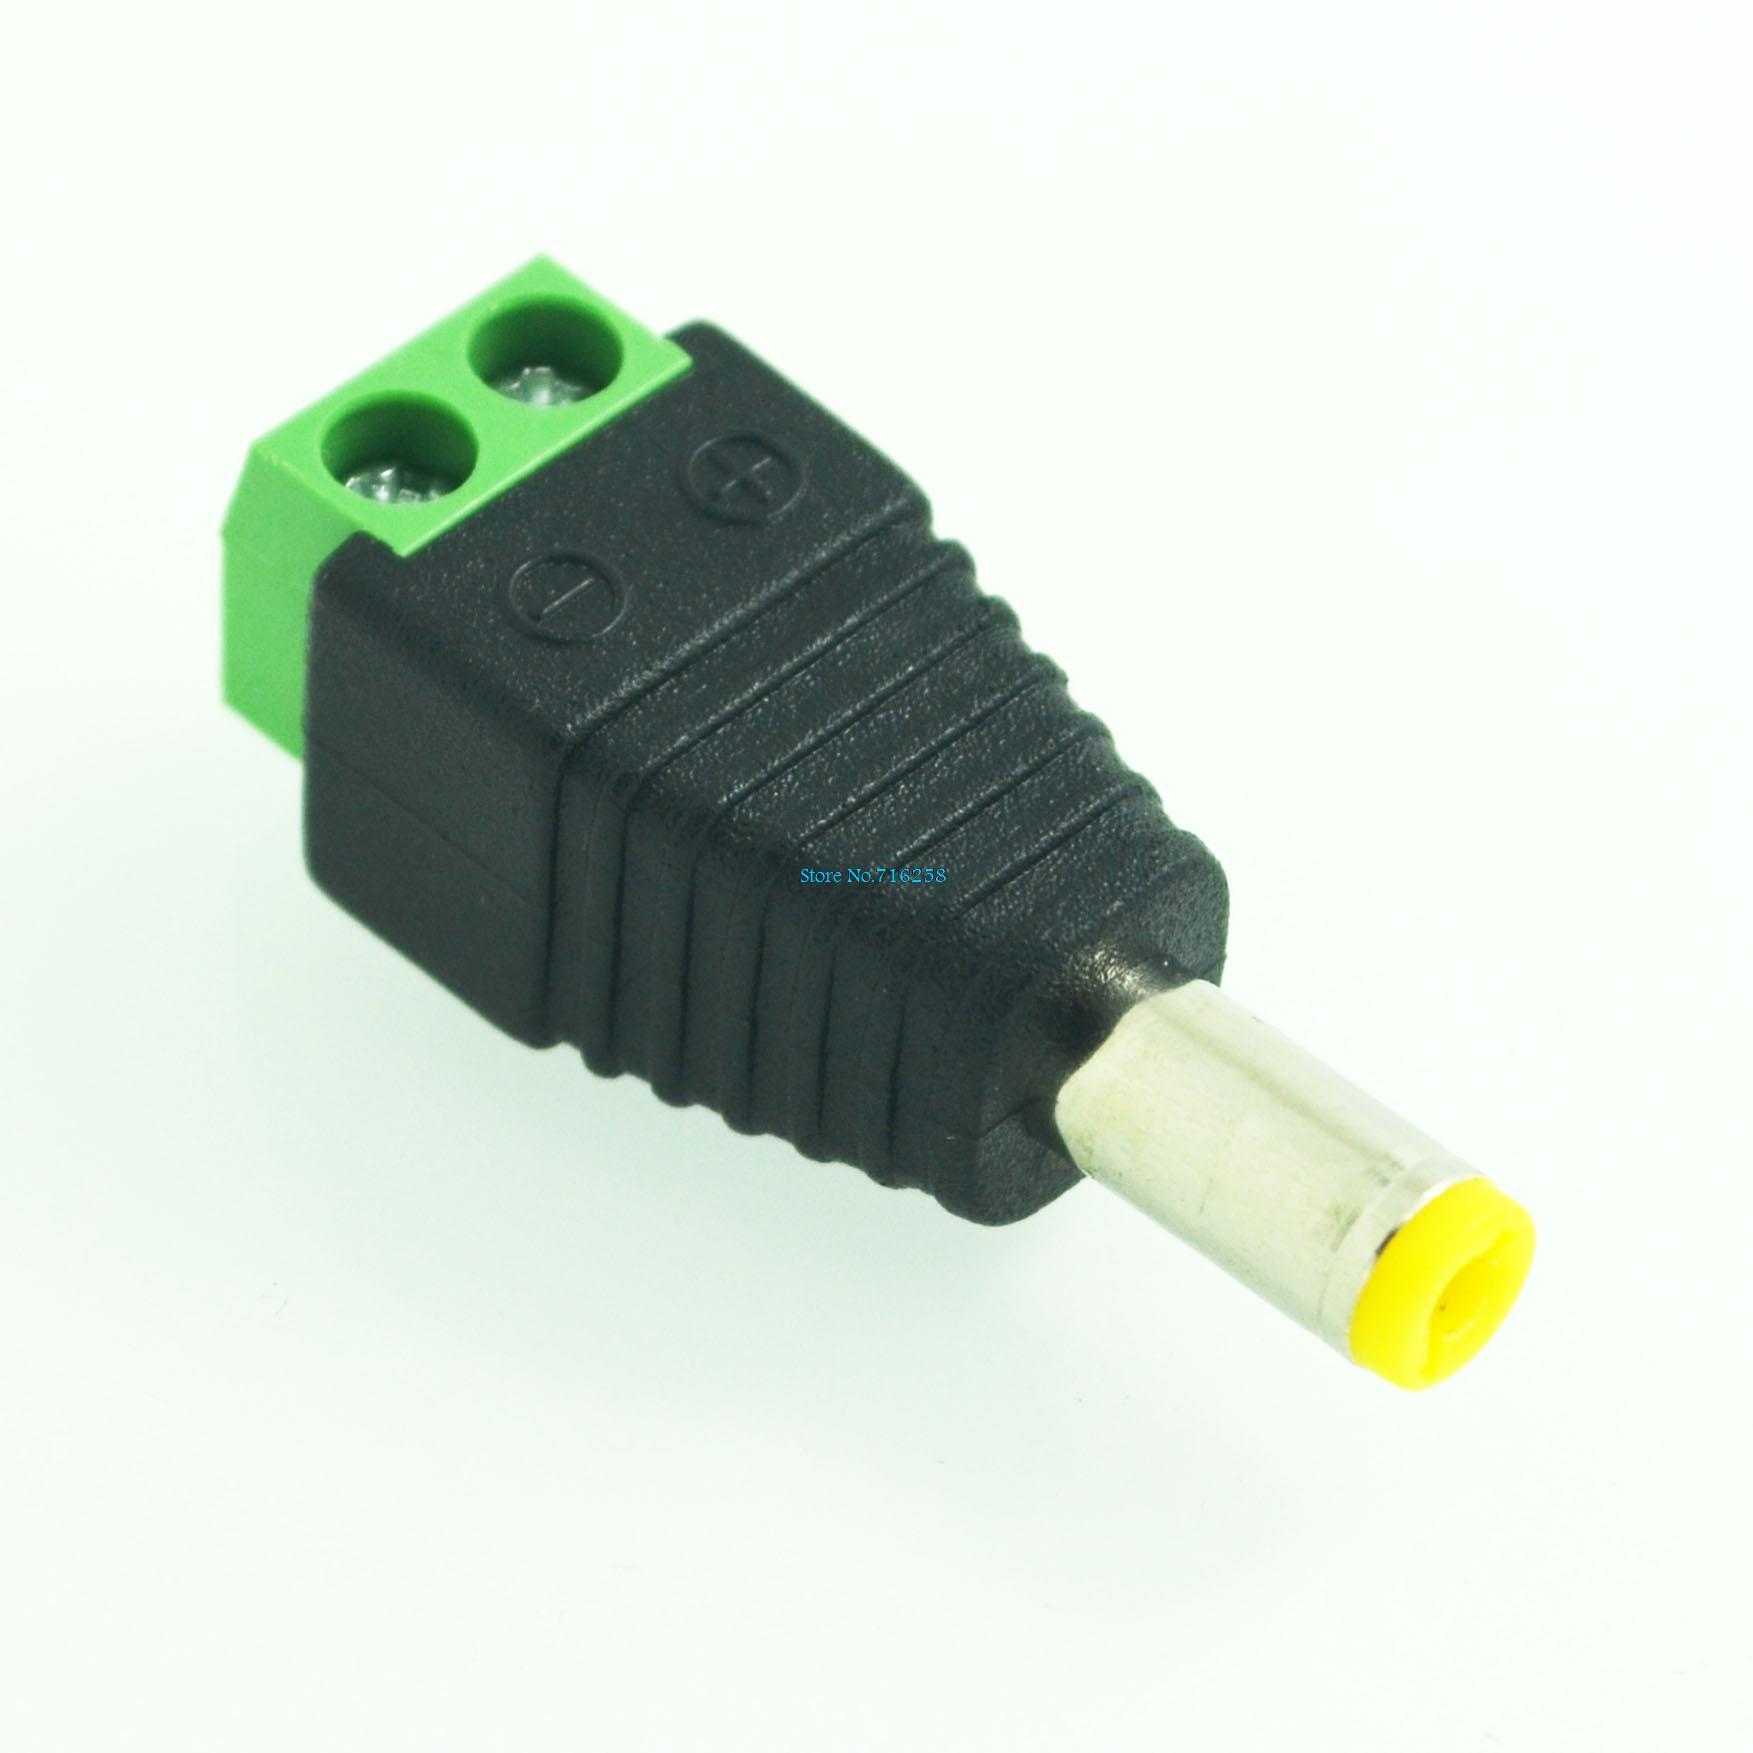 10Pcs 12V 2.1 x 5.5mm DC Power Male Plug Jack Adapter Connector Plug for CCTV single color LED Light